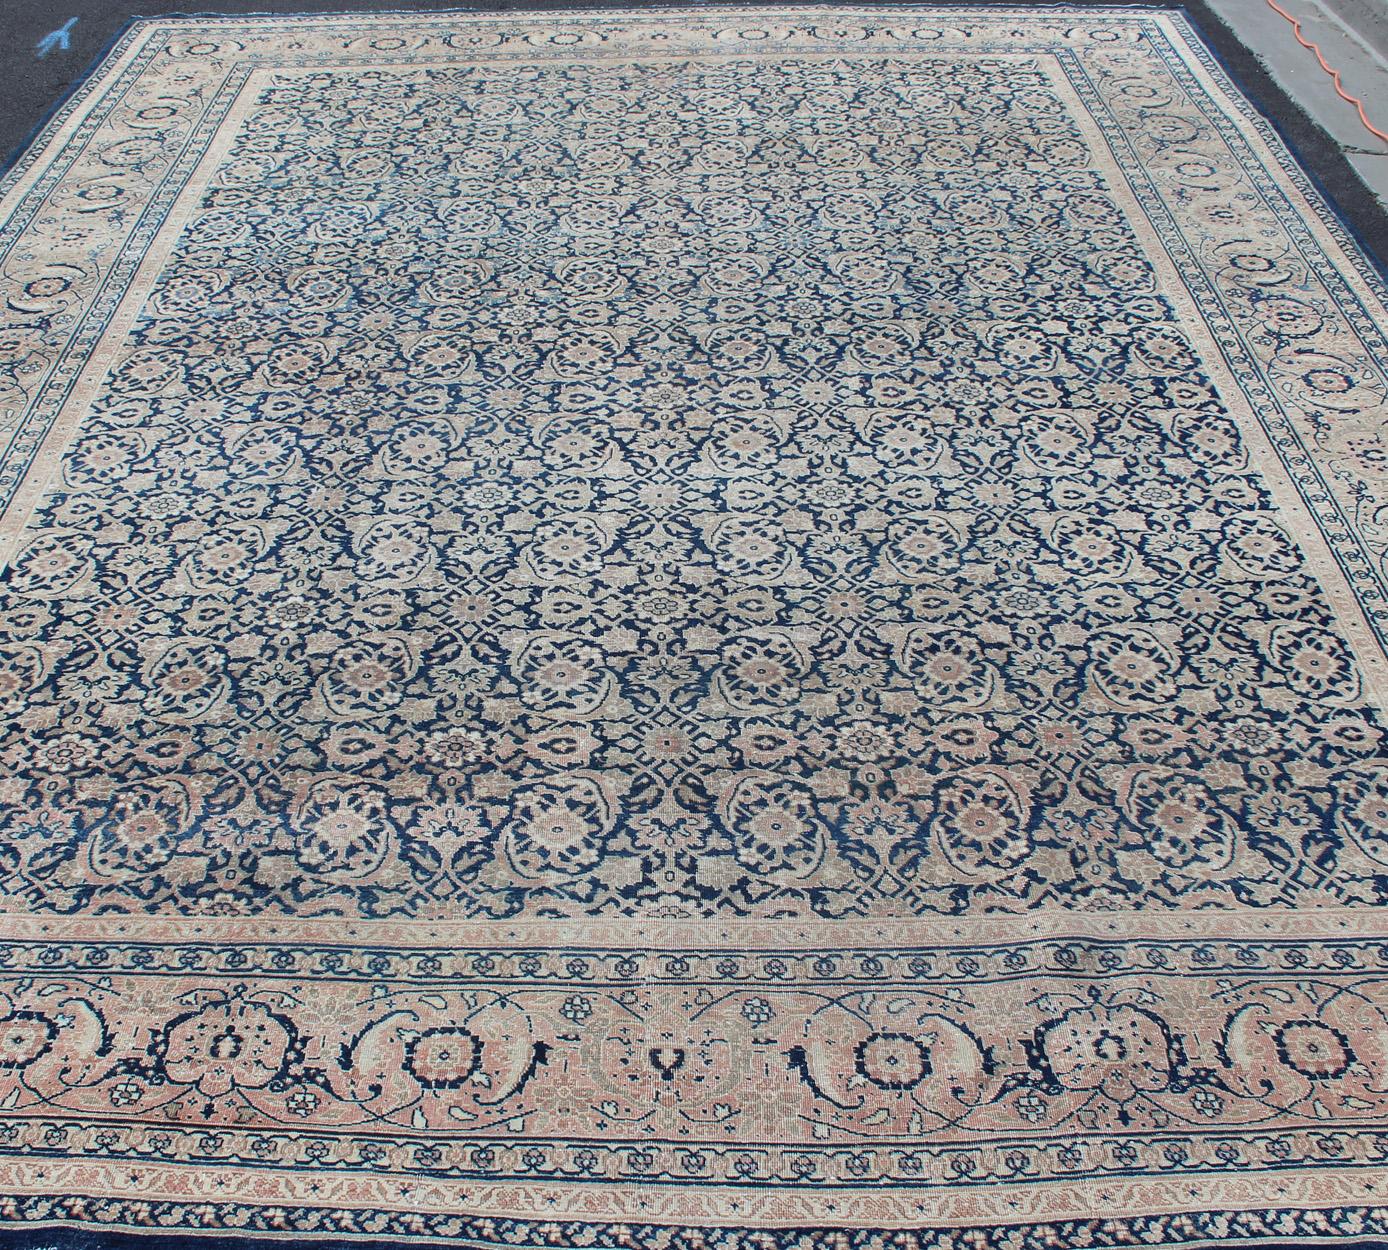 Early 20th Century Antique Persian Tabriz Carpet with Geometric Herati Design in Dark Blue Tones For Sale